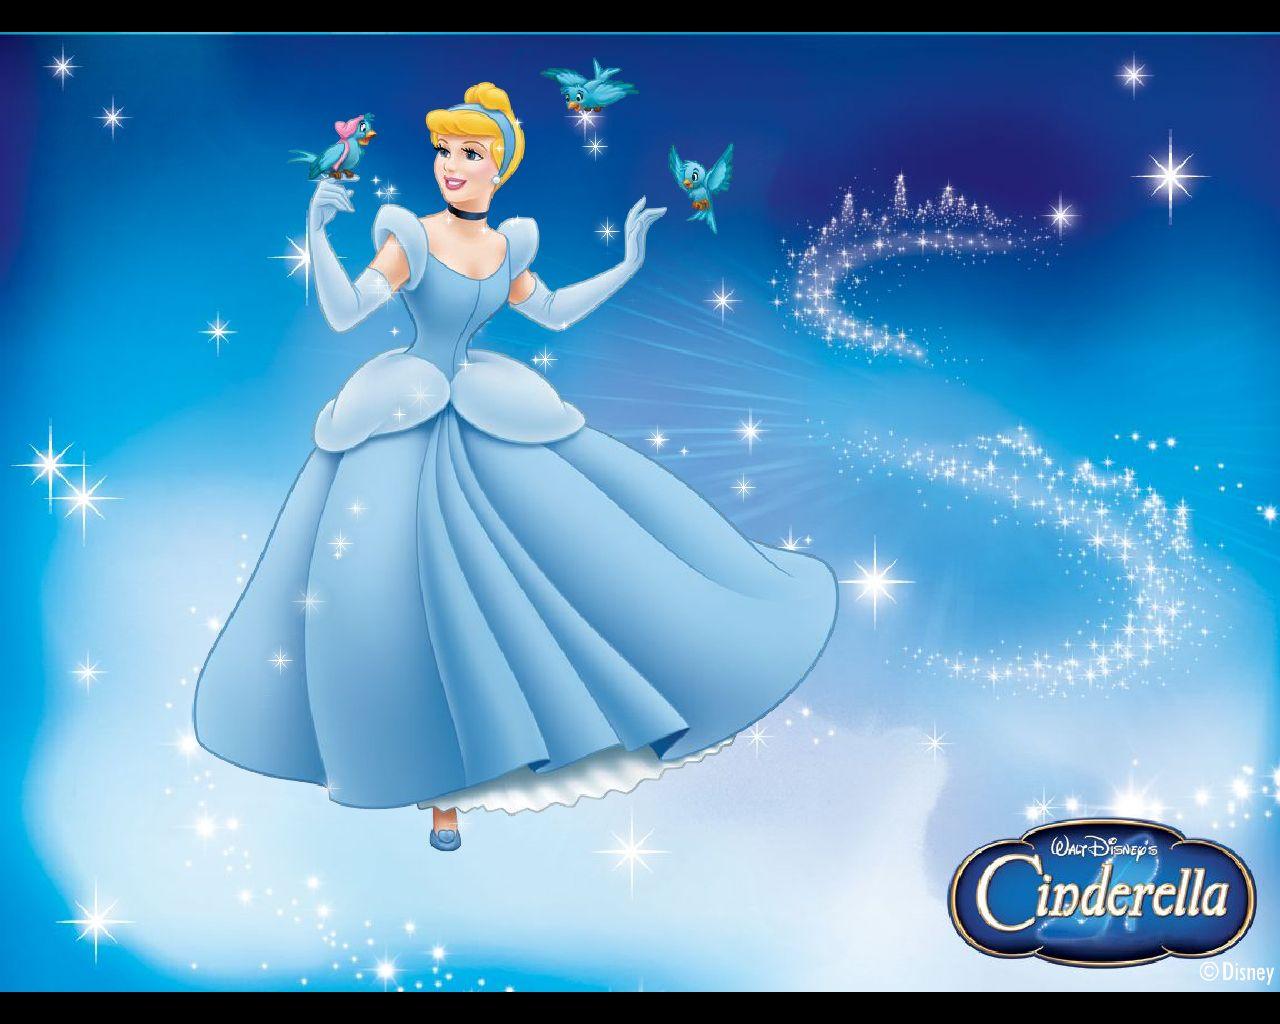 Cinderella Disney Princess Wallpaper For Background